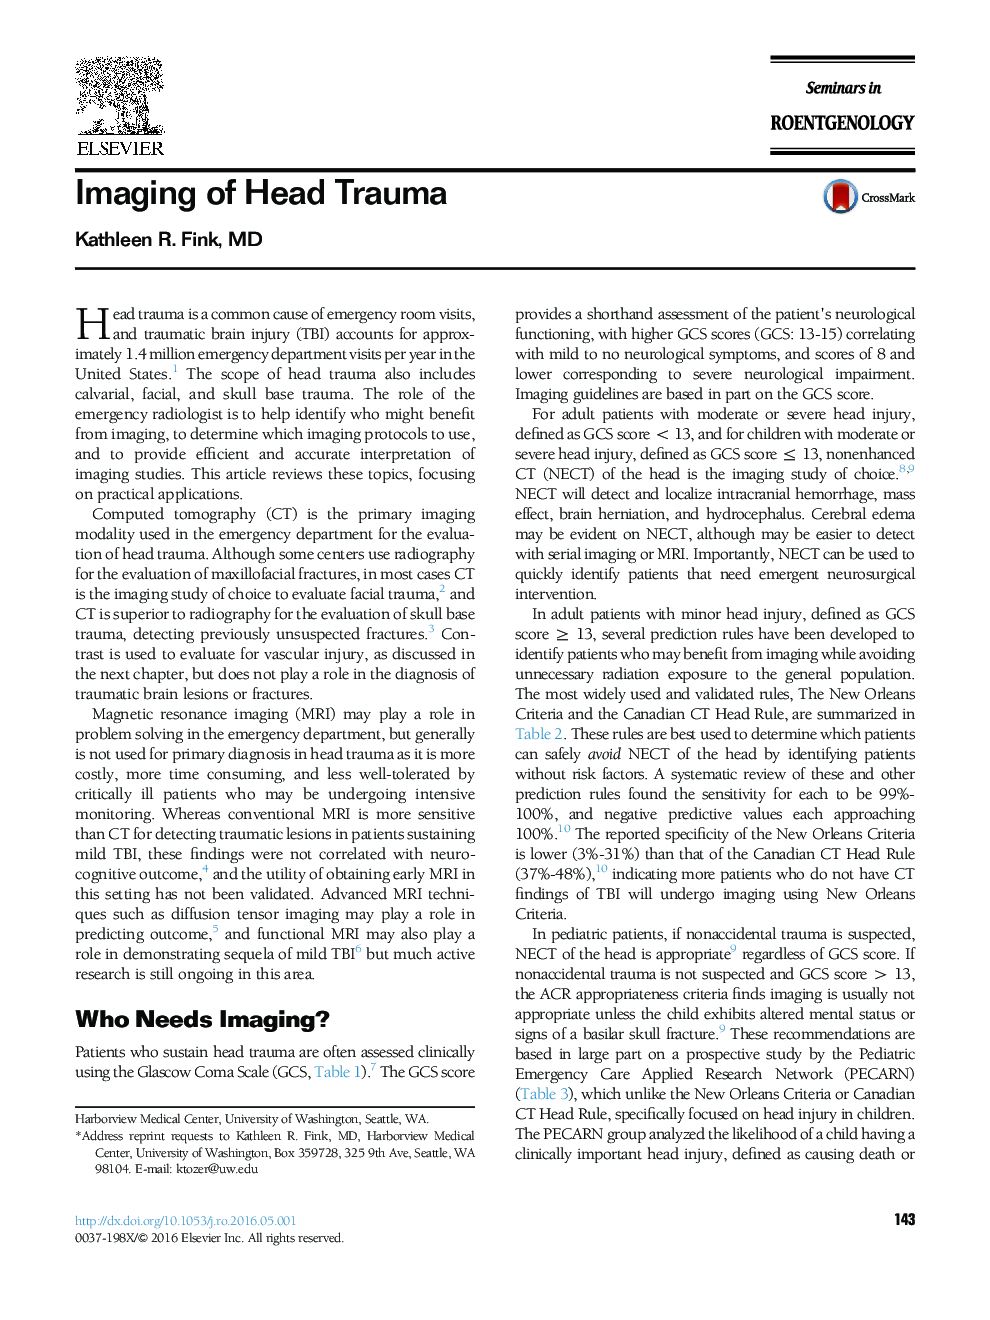 Imaging of Head Trauma